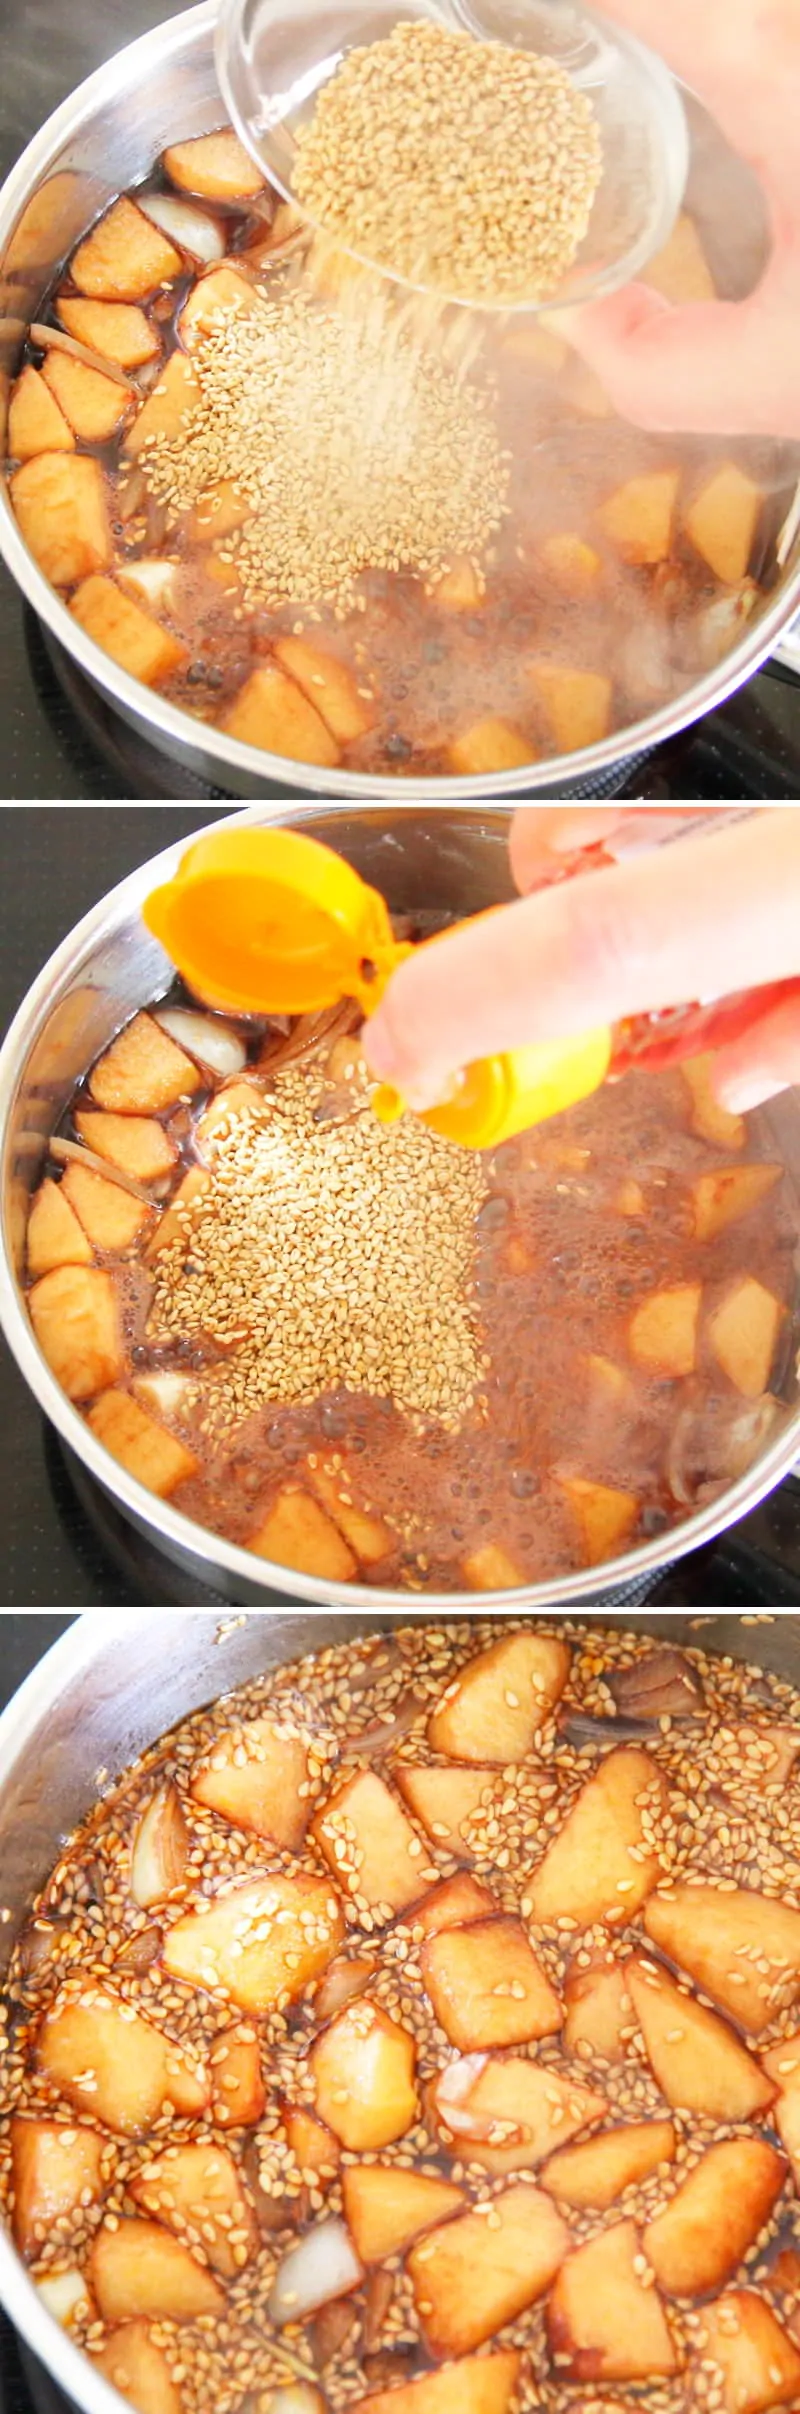 Teppanyaki Grillsauce Schritt 6 Zutaten hinzufügen